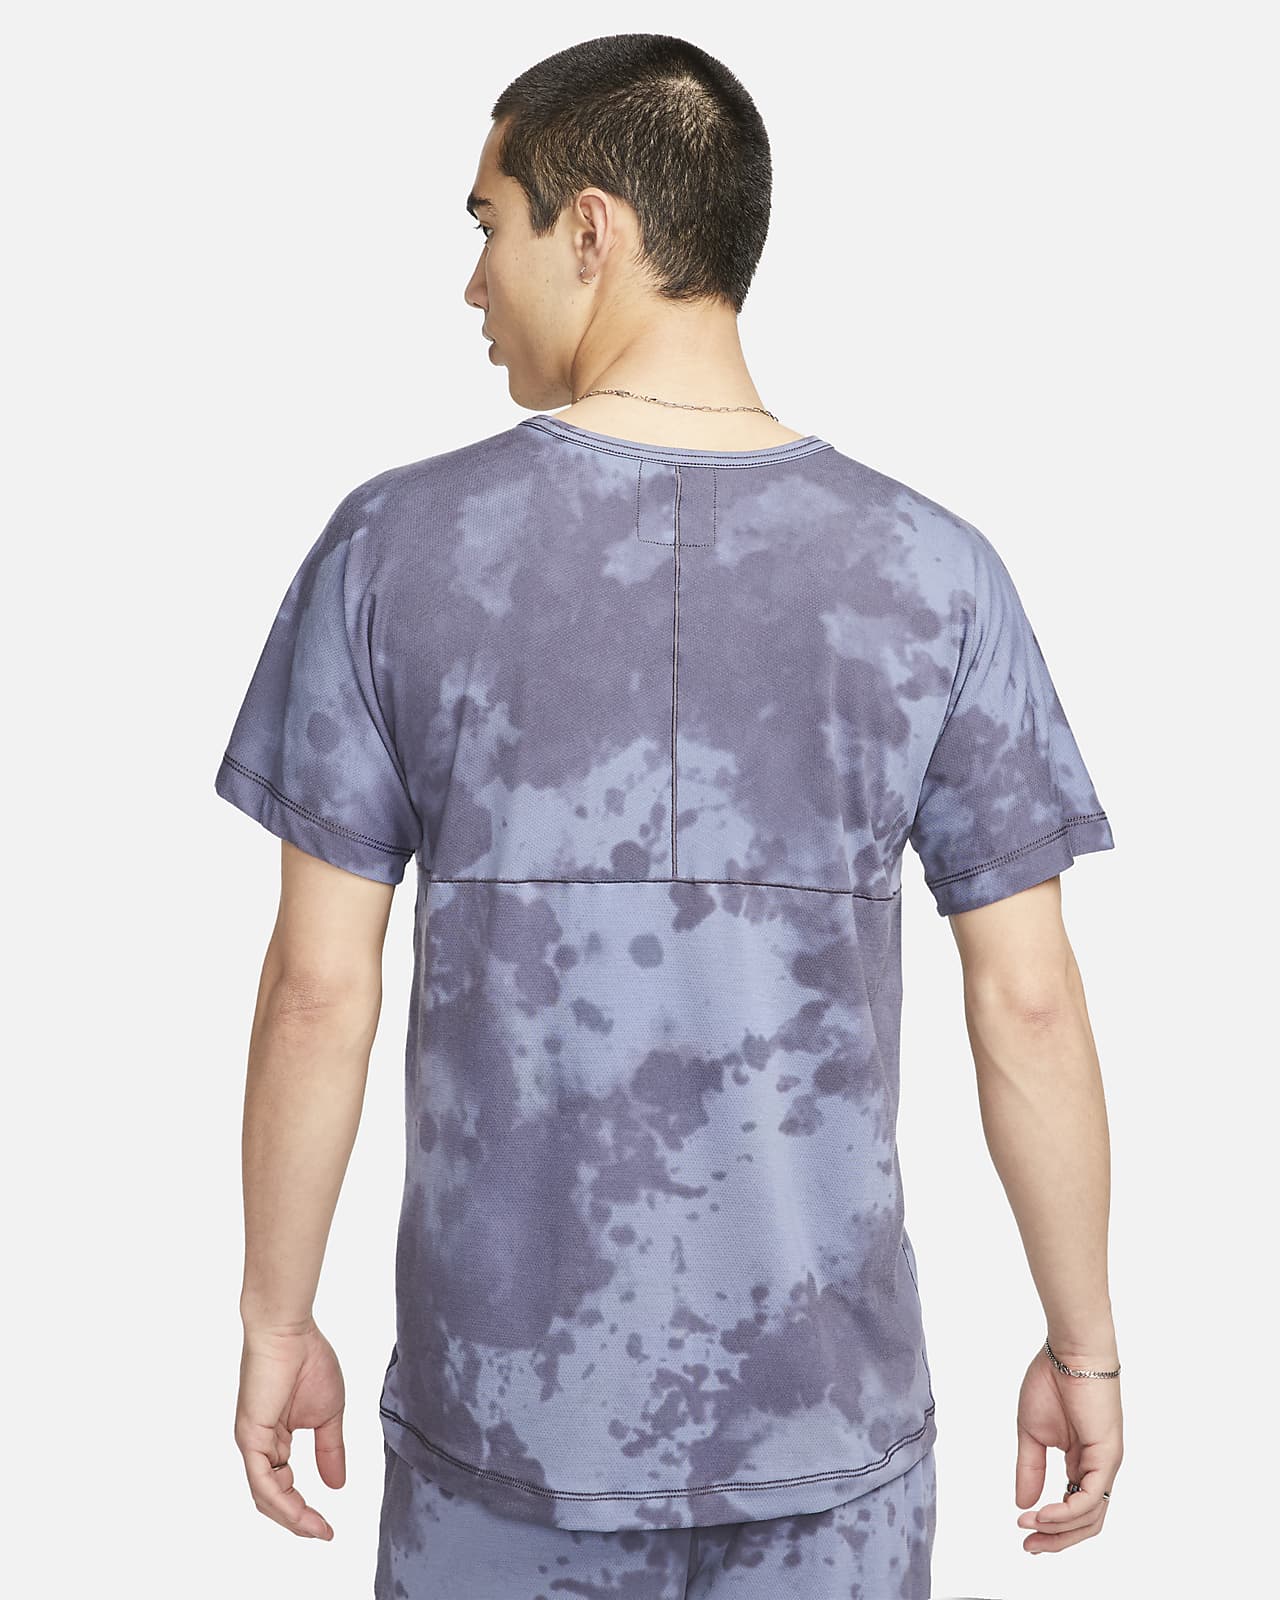 Nike Dri-FIT Men's All-Over Print Short-Sleeve Yoga Top